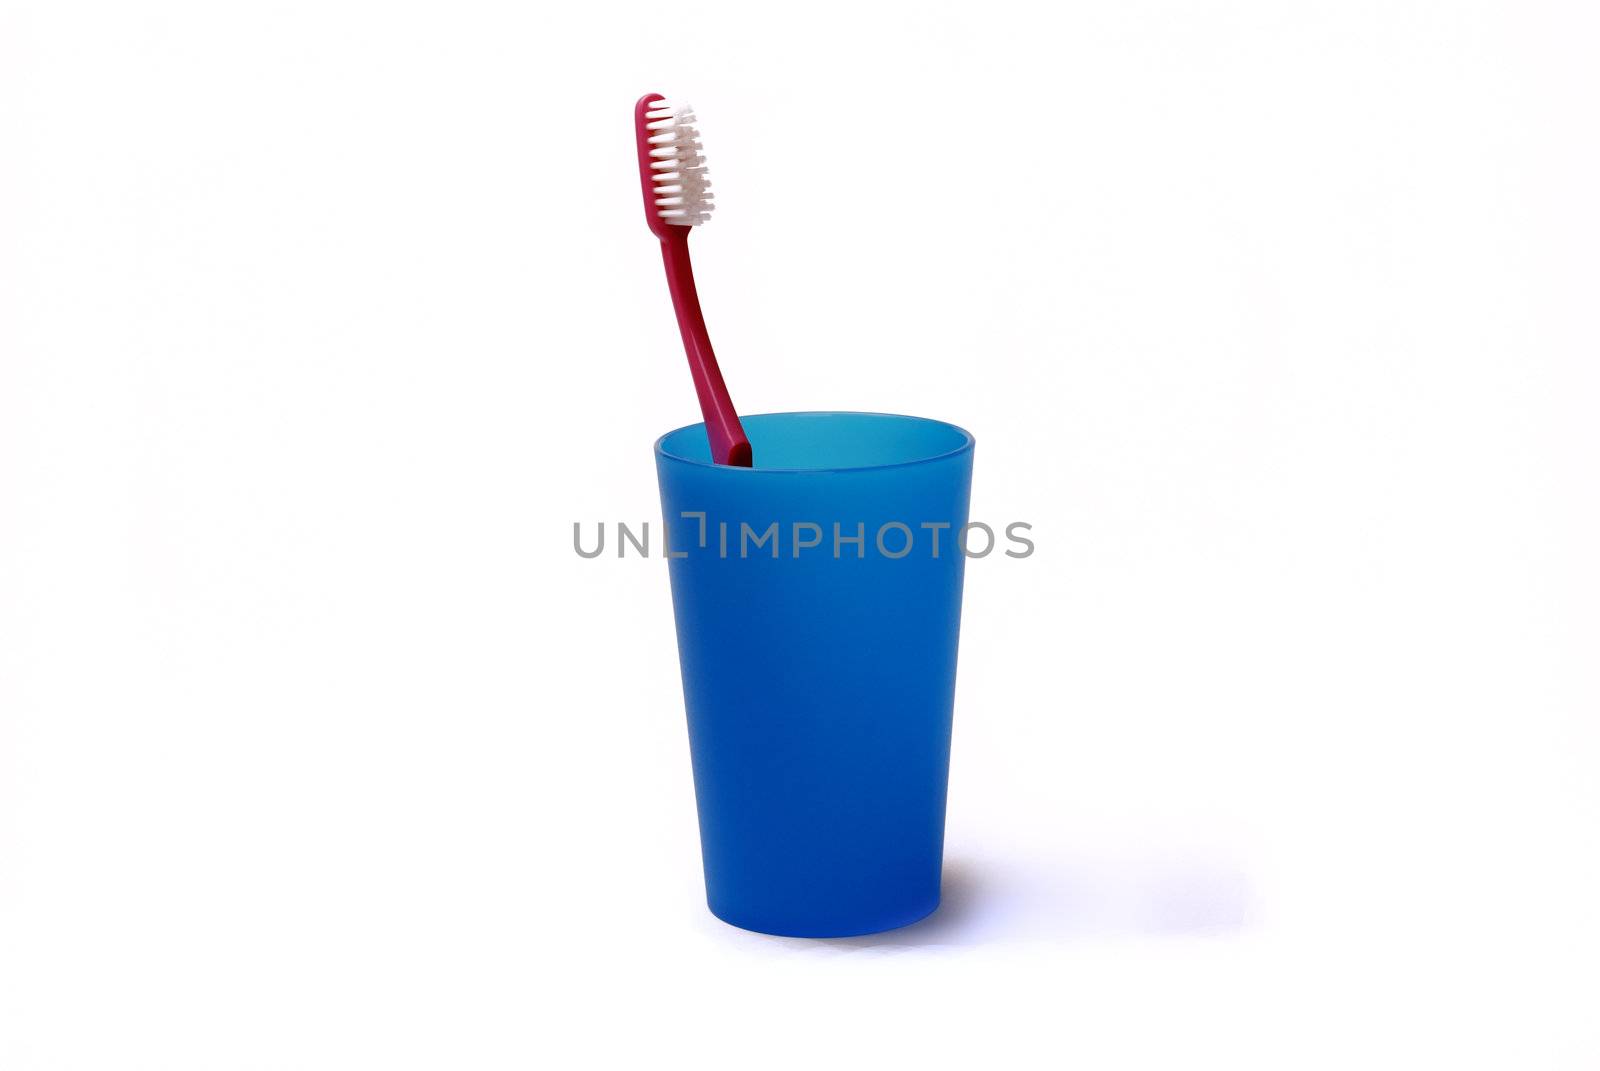 Toothbrush by KRoman